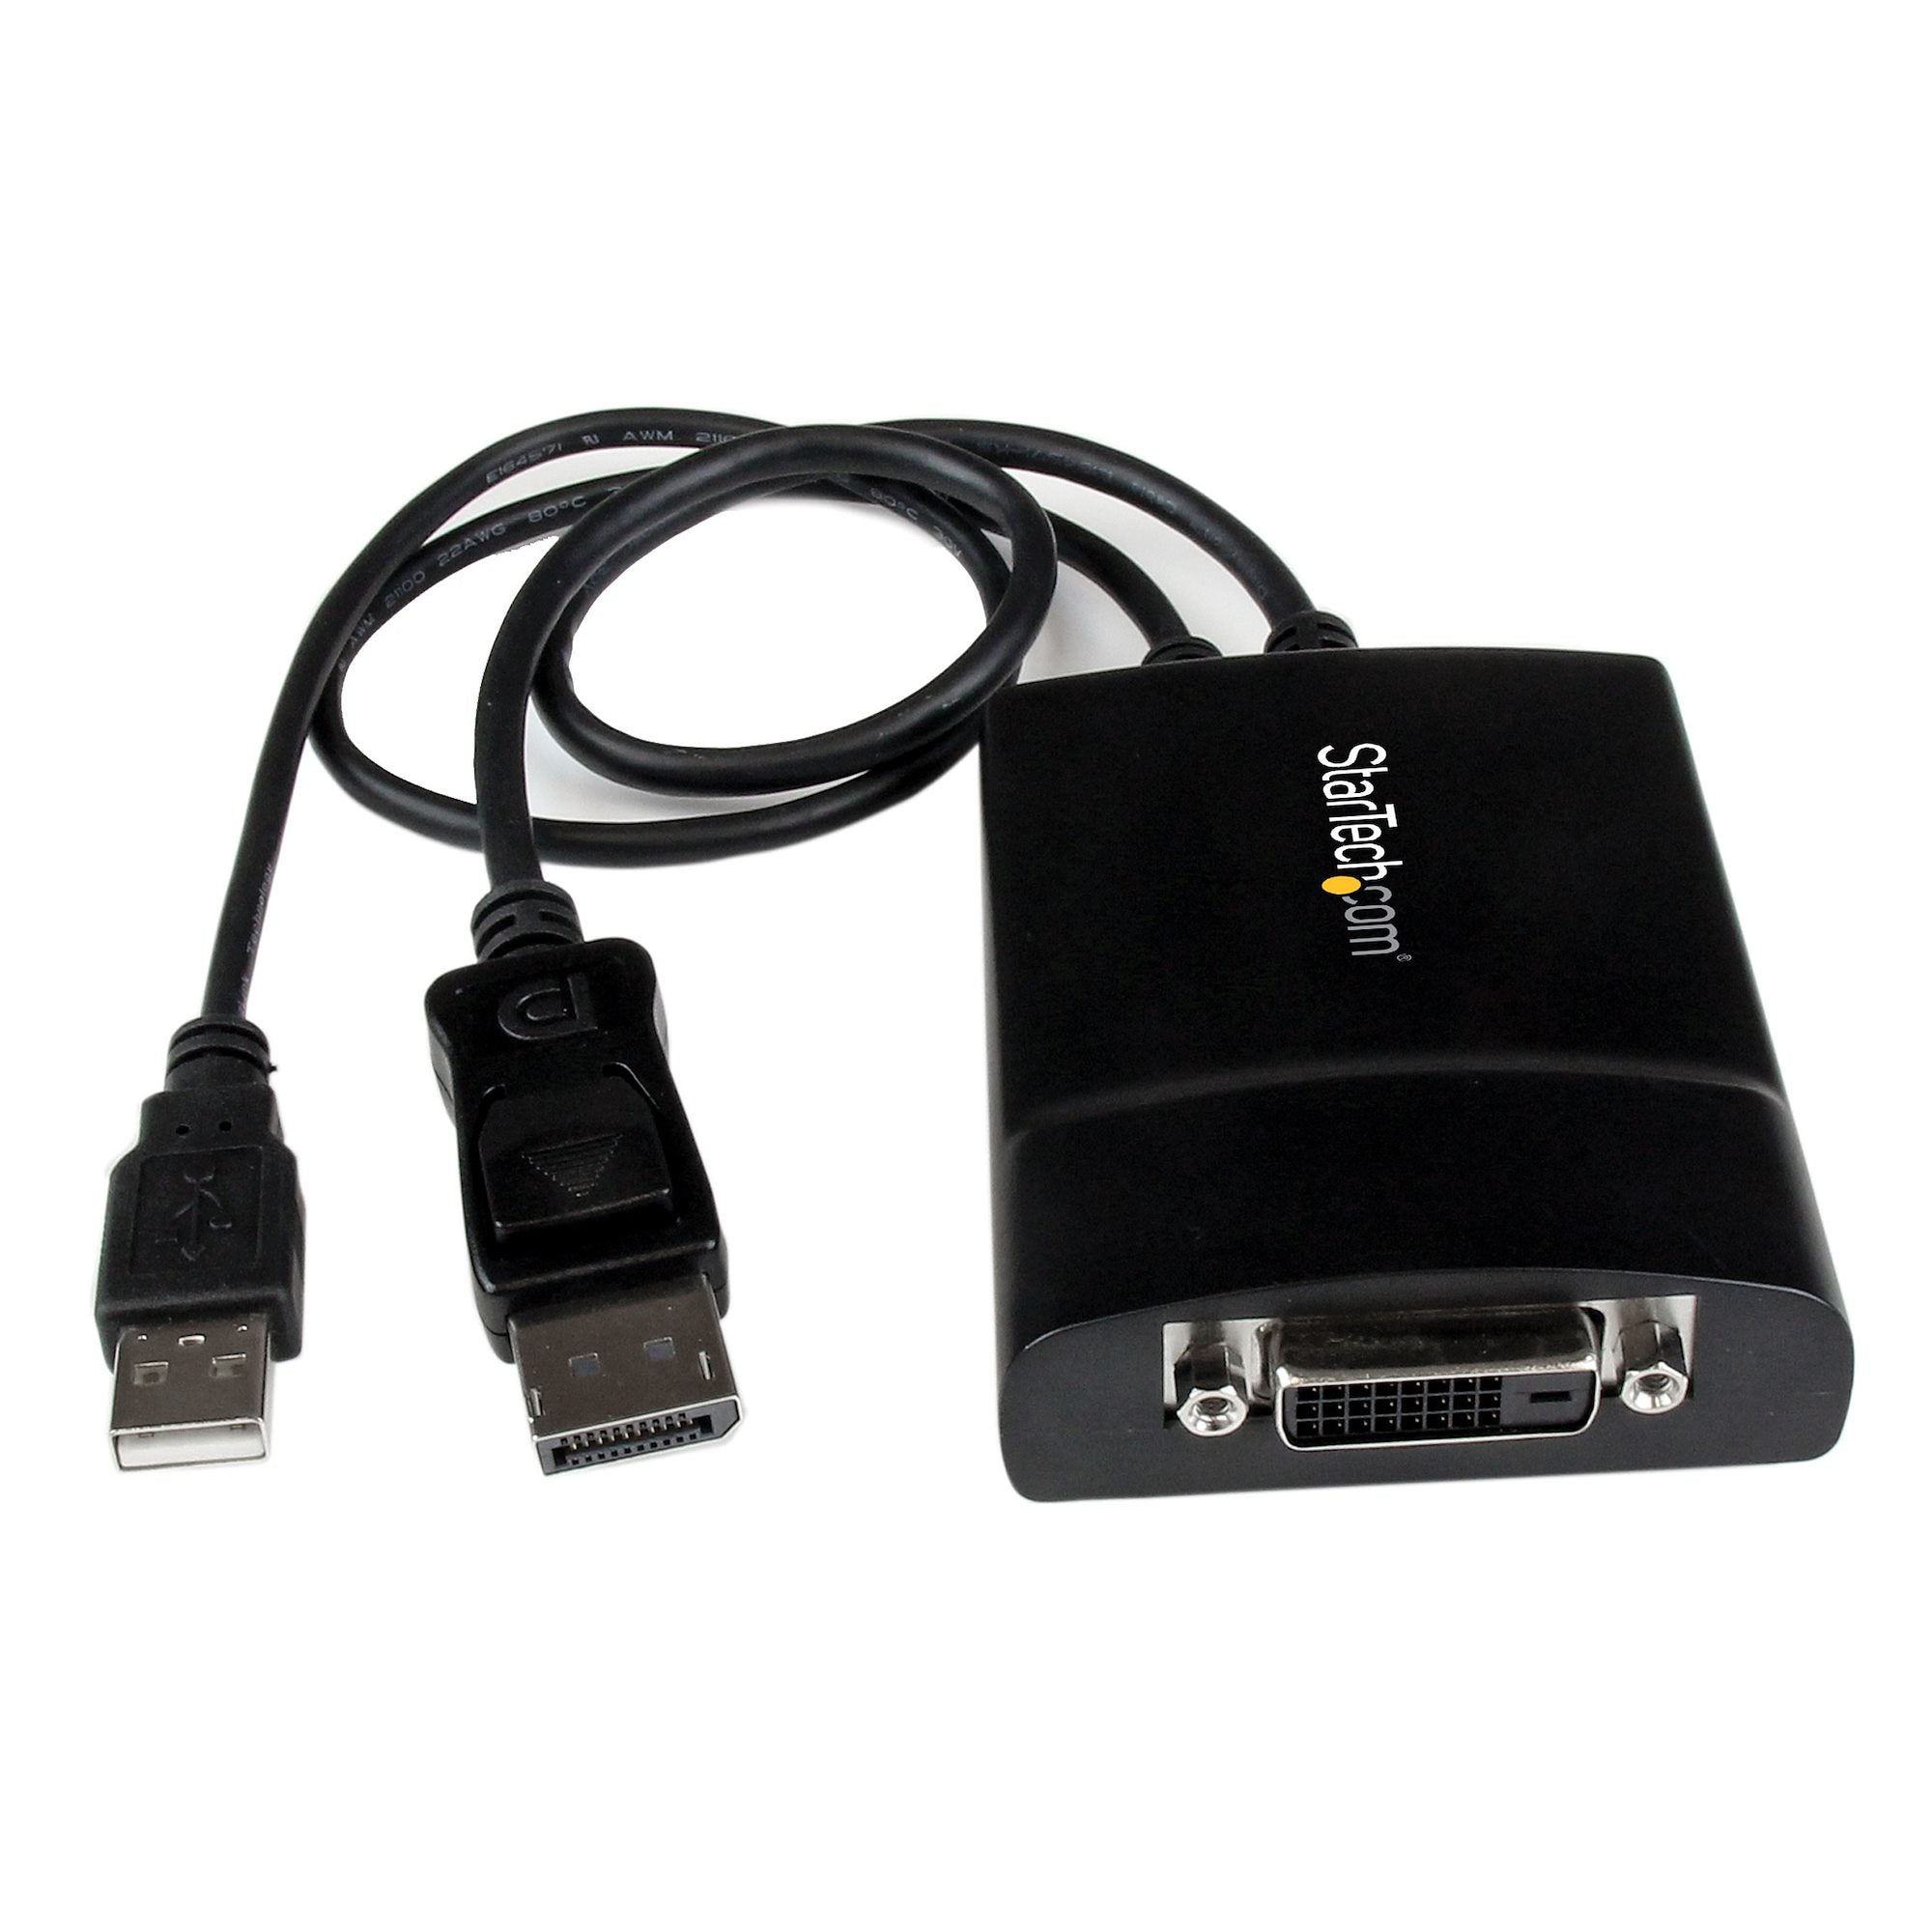 StarTech.com DisplayPort to DVI Dual Link Active Adapter - DisplayPort to DVI-D Adapter Video Converter 2560x1600 60Hz - DP 1.2 to DVI Monitor - USB Powered - Latching DP Connector